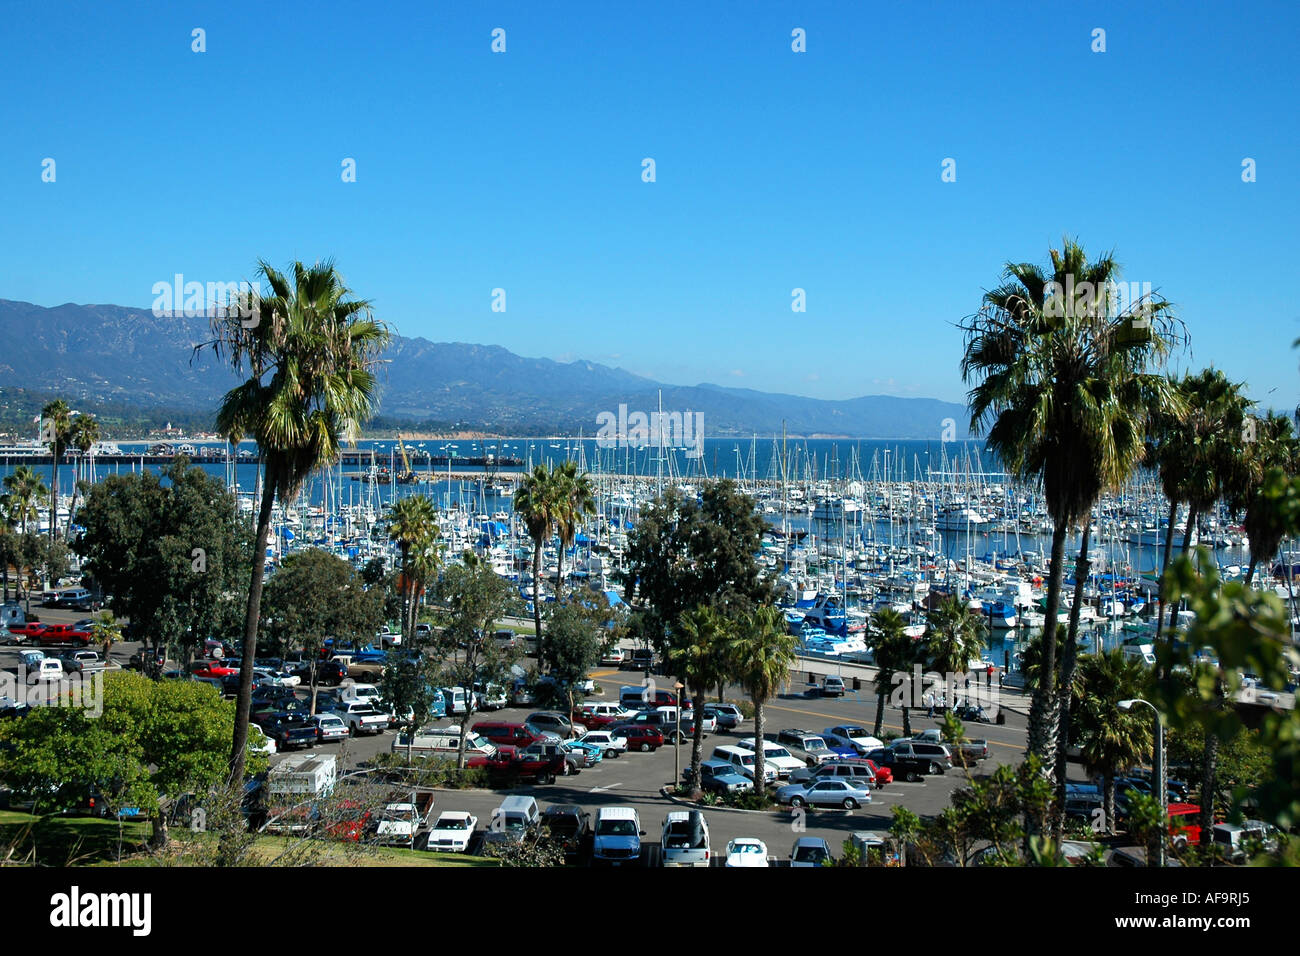 Crowded marina, parking lot, and palm trees in Santa Barbara, California Stock Photo